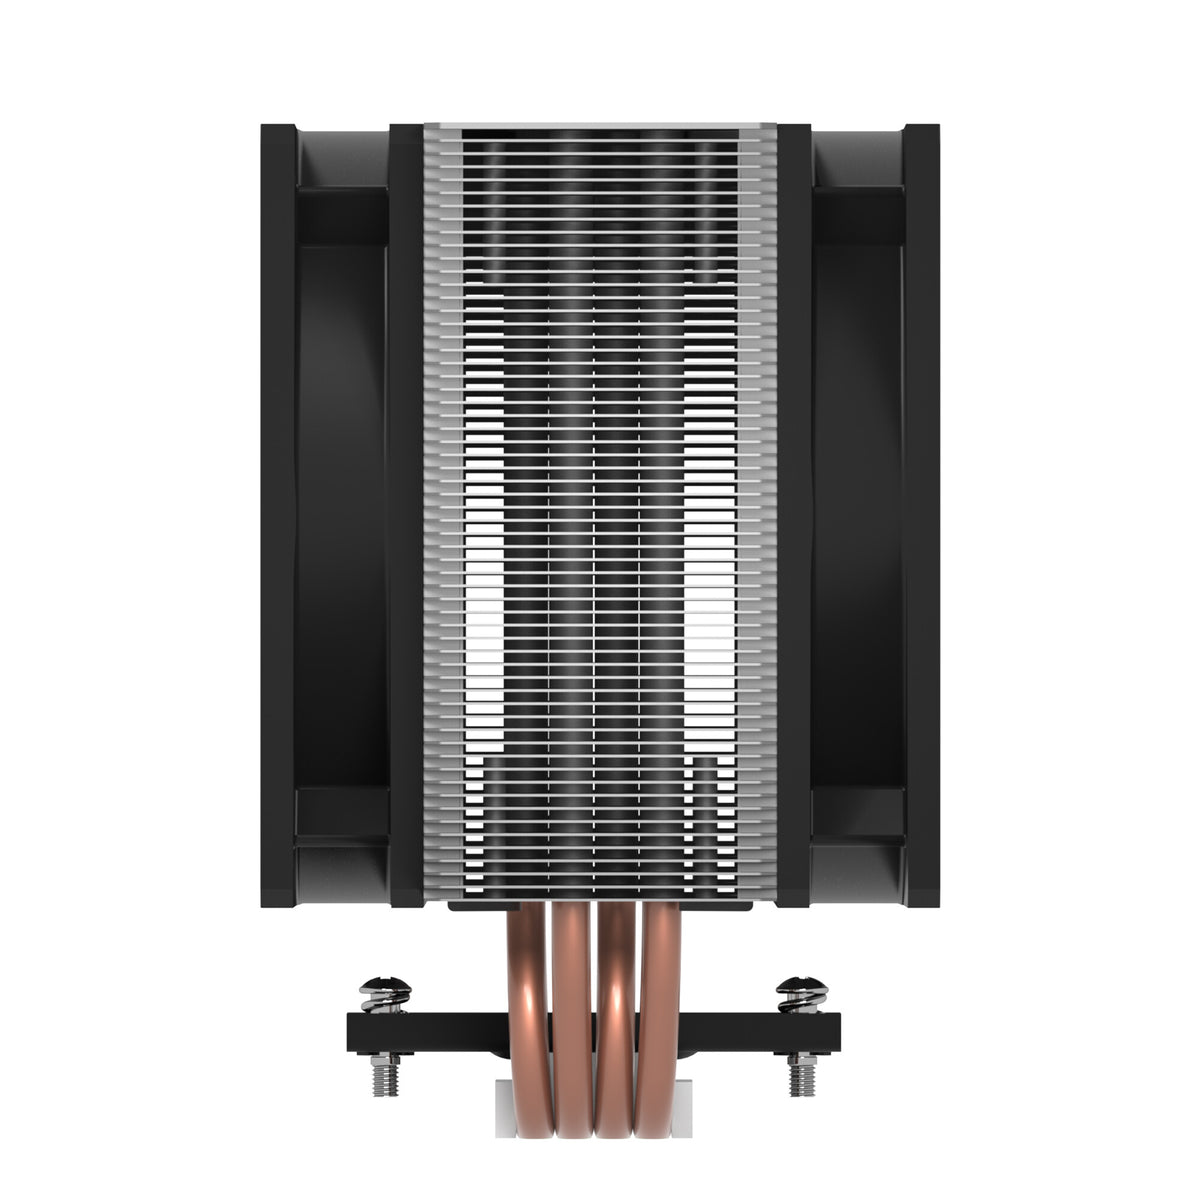 ARCTIC Freezer 36 - Air Processor Cooler in Black / Silver - 120mm